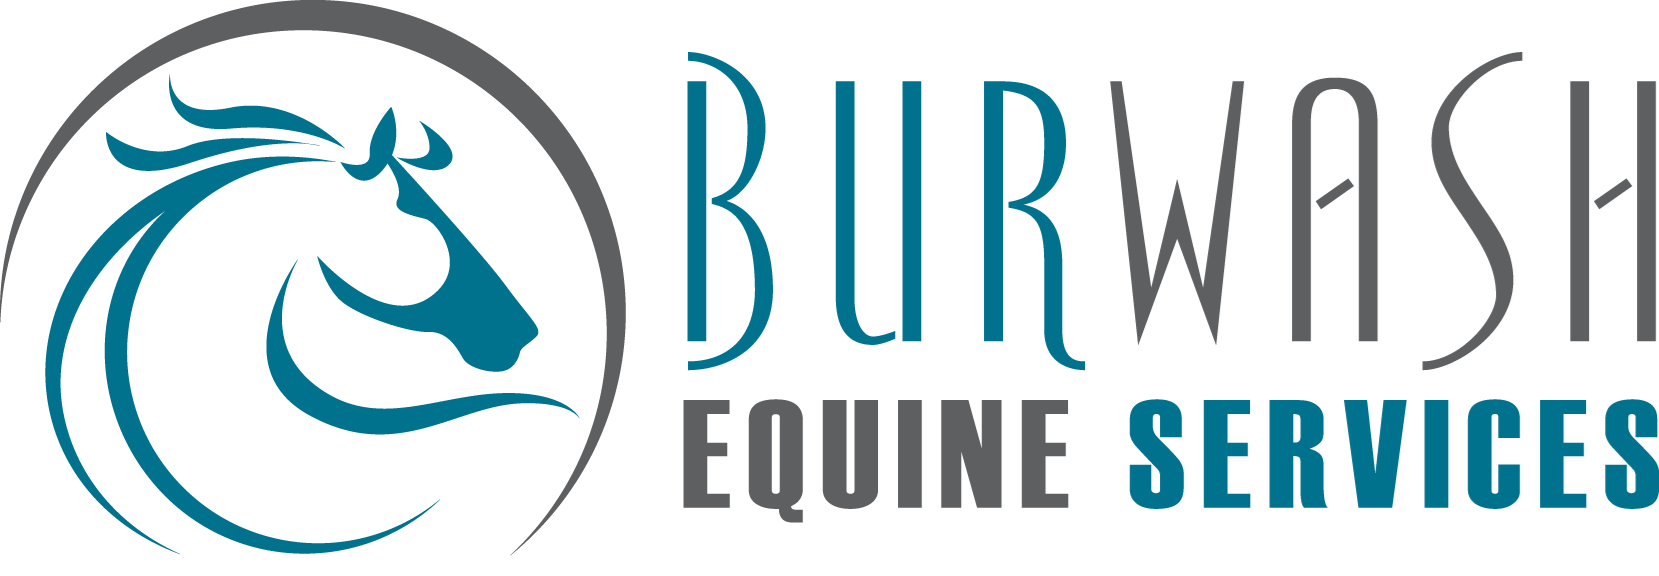 Burwash Equine Services